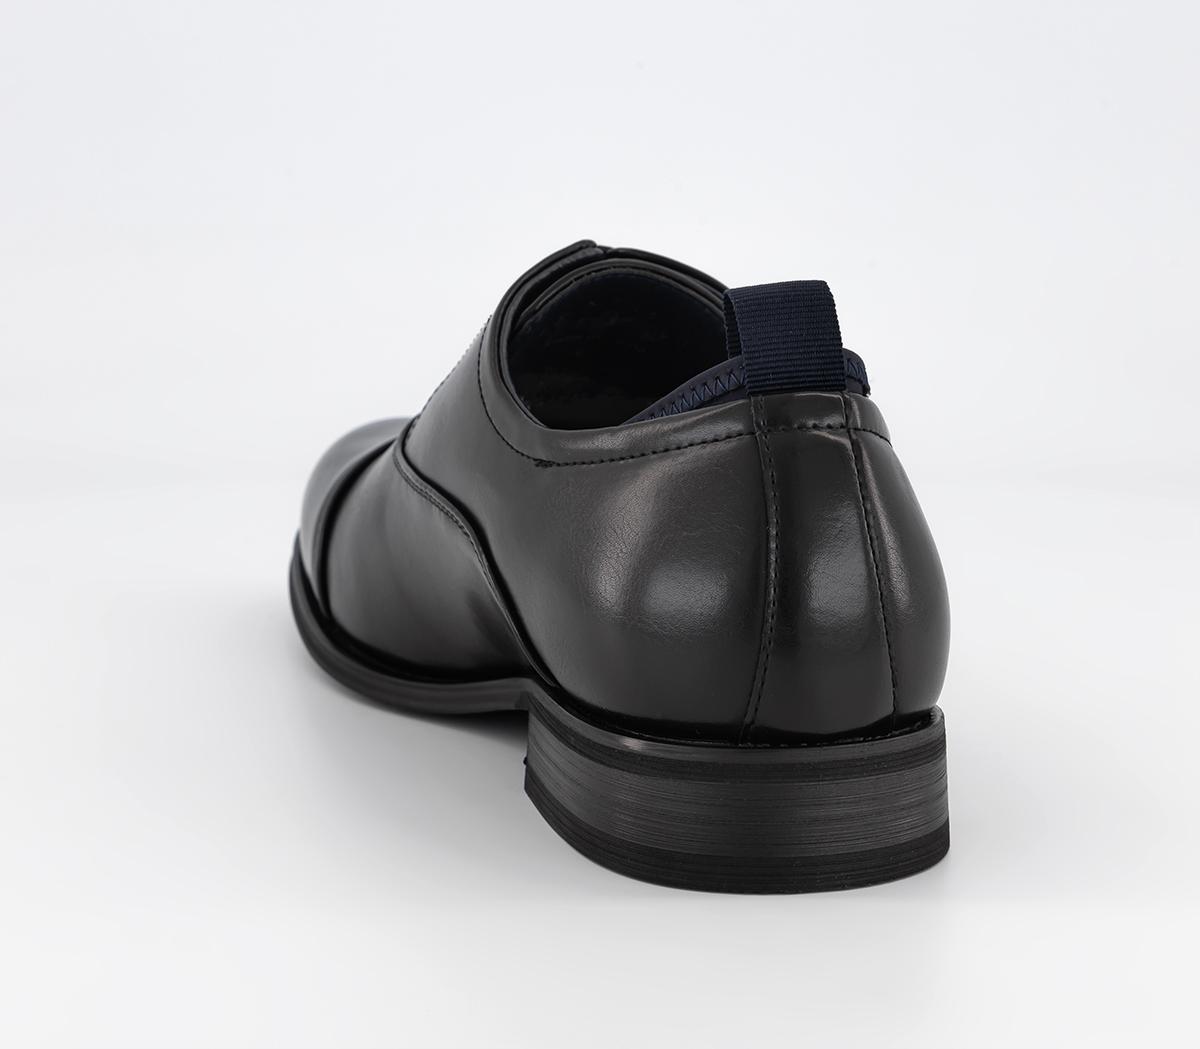 OFFICE Mckinney Oxford Toecap Neoprene Sock Shoes Black - Men’s Smart Shoes